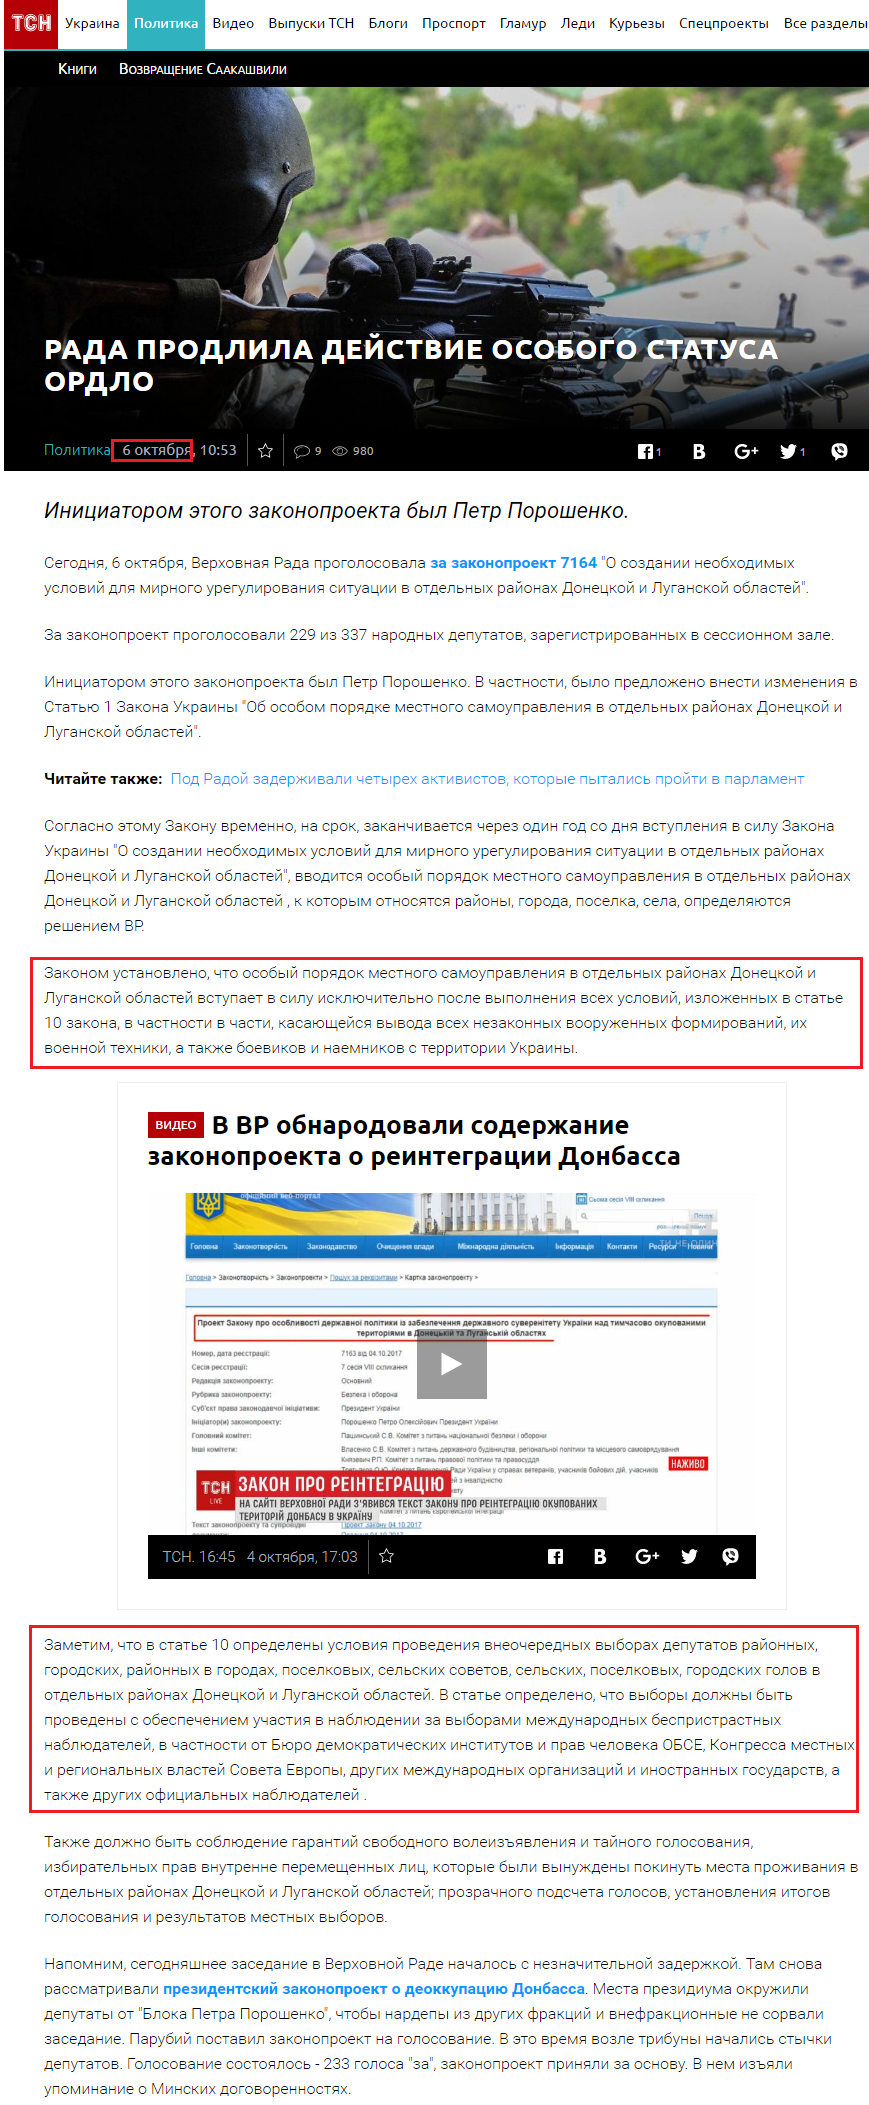 https://ru.tsn.ua/politika/rada-prinyala-zakon-poroshenko-o-reintegracii-donbassa-1005830.html